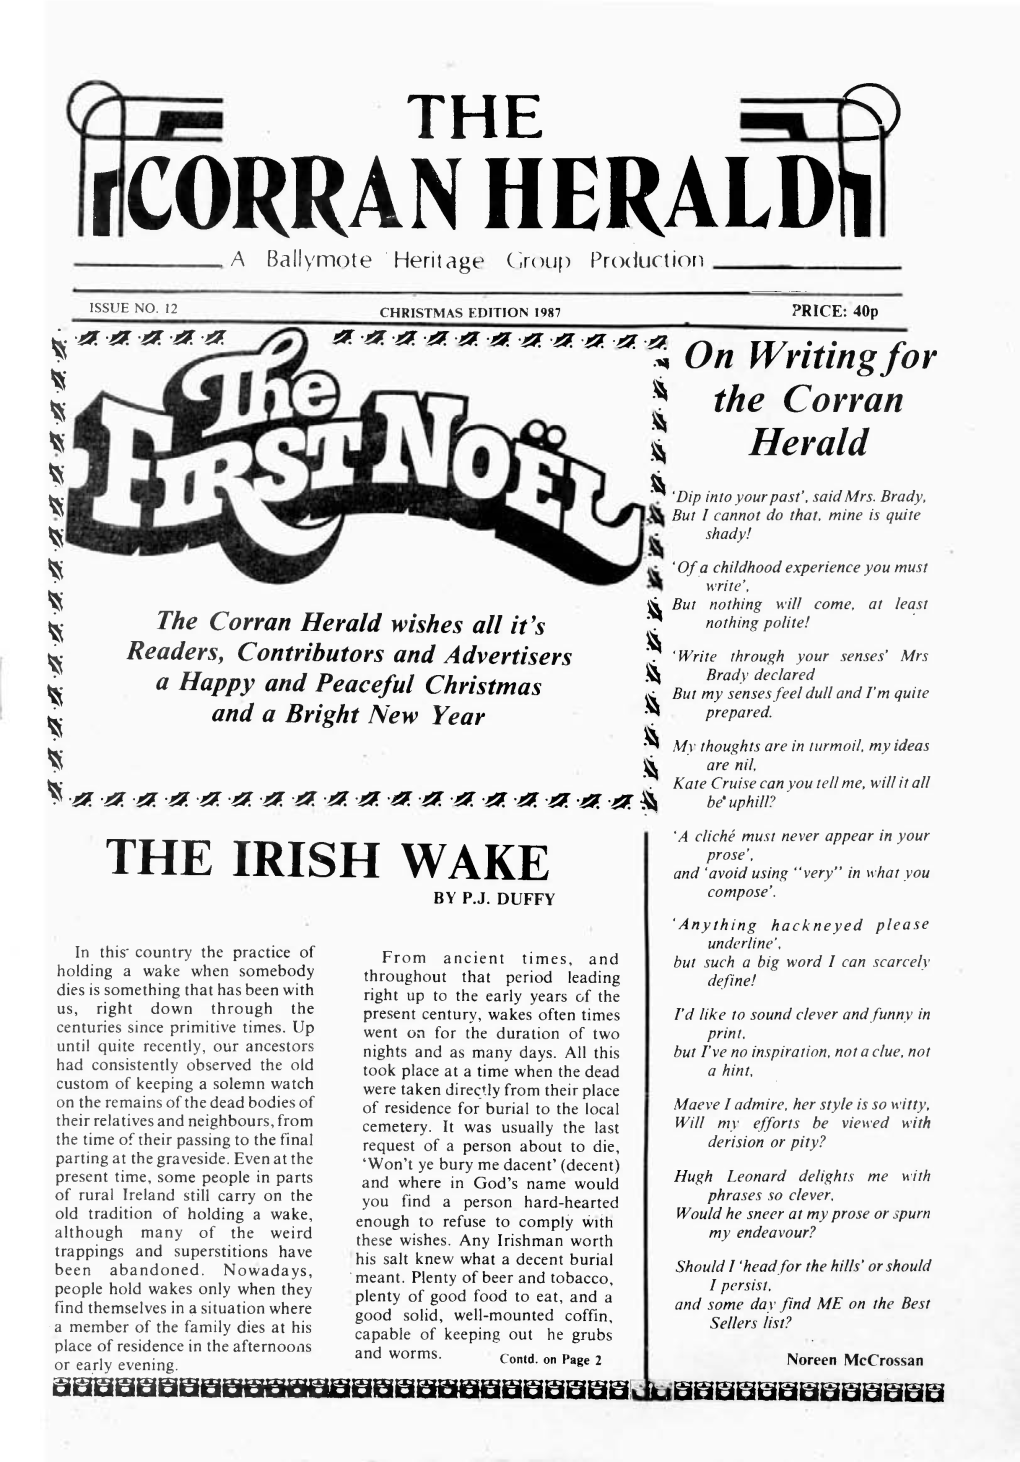 The Corran Herald Issue 12, 1987